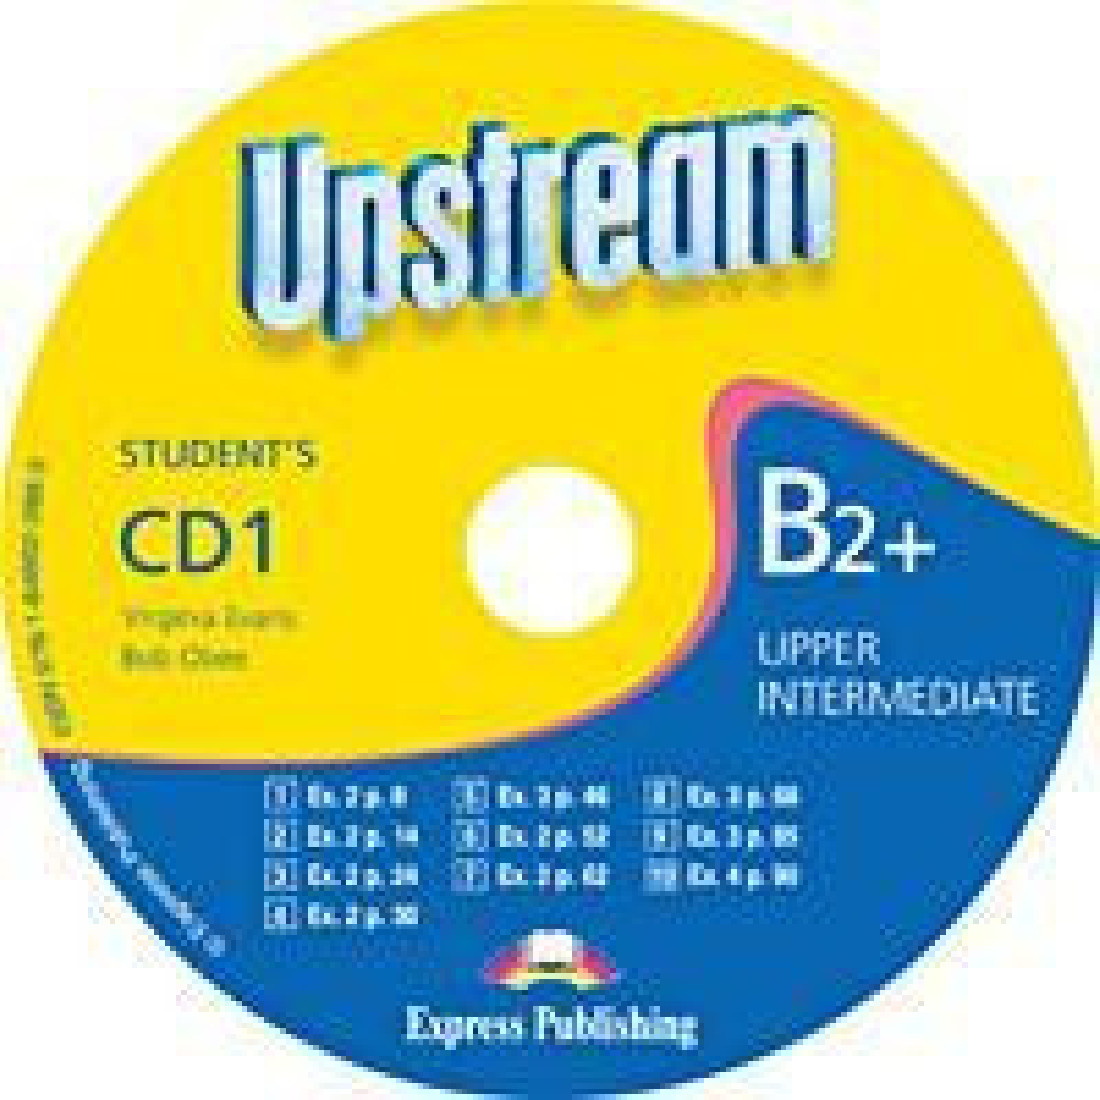 UPSTREAM UPPER-INTERMEDIATE B2+ PUPILS CD(1) (PART A)